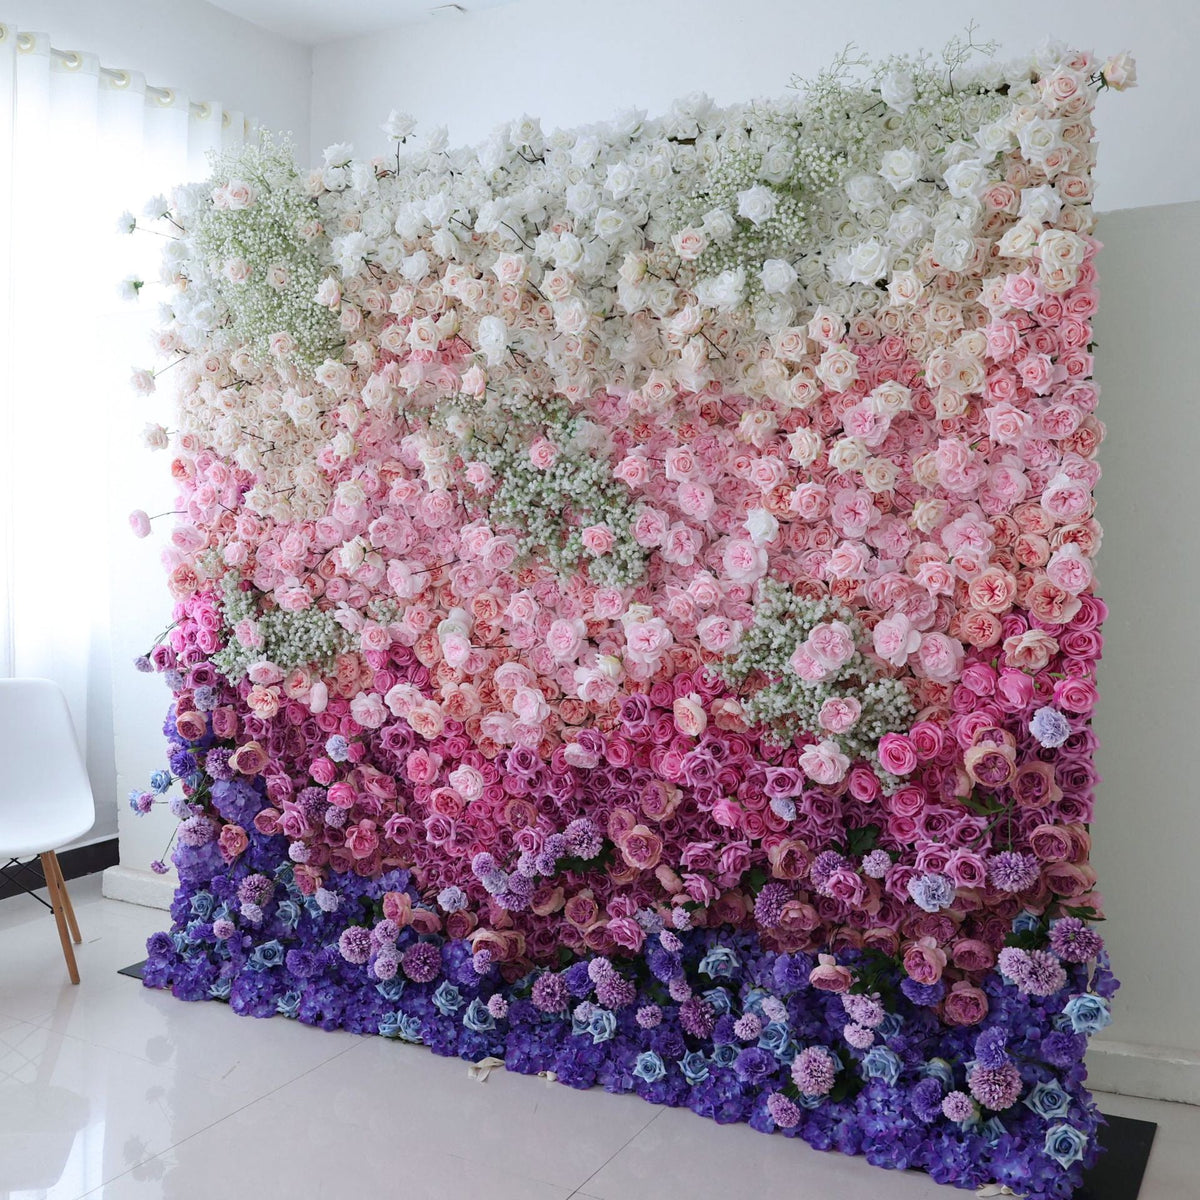 3D Artificial Flower Wall Arrangement Wedding Party Birthday Backdrop Decor HQ1340